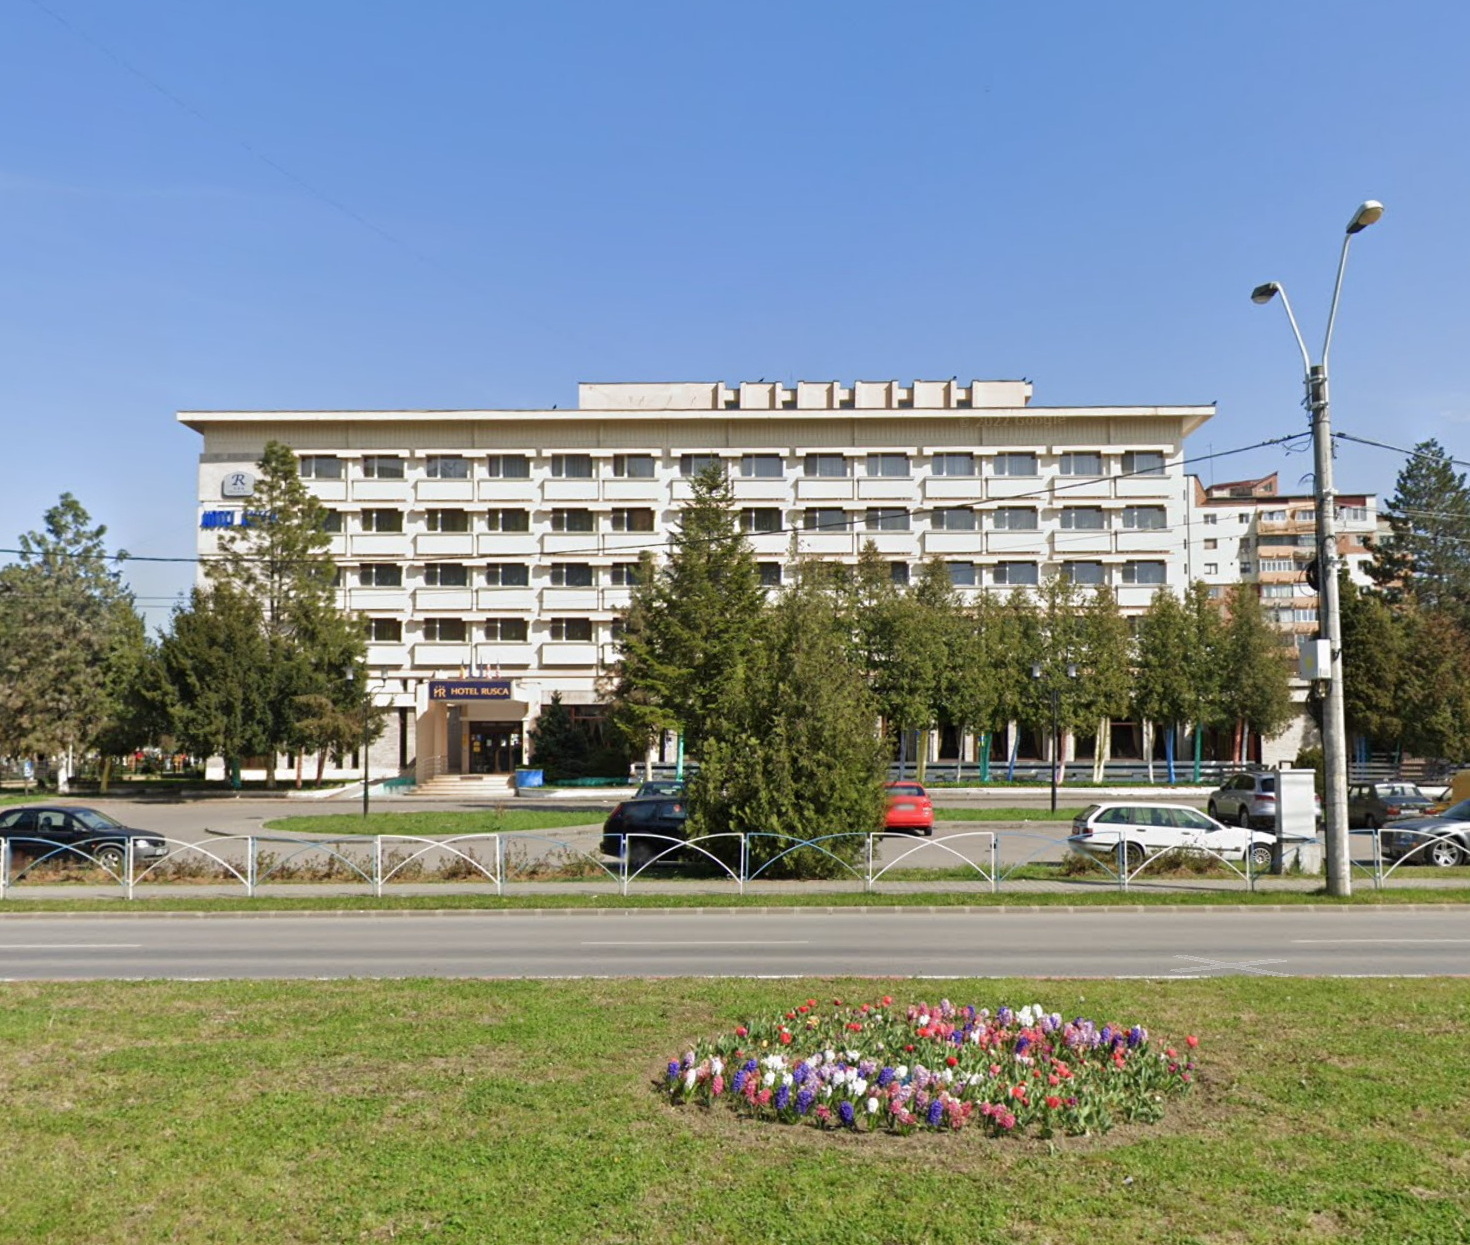 cazare hunedoara - Cazare in Hunedoara - Hotel Rusca ***, rezervari online in Hunedoara: Hotel ***